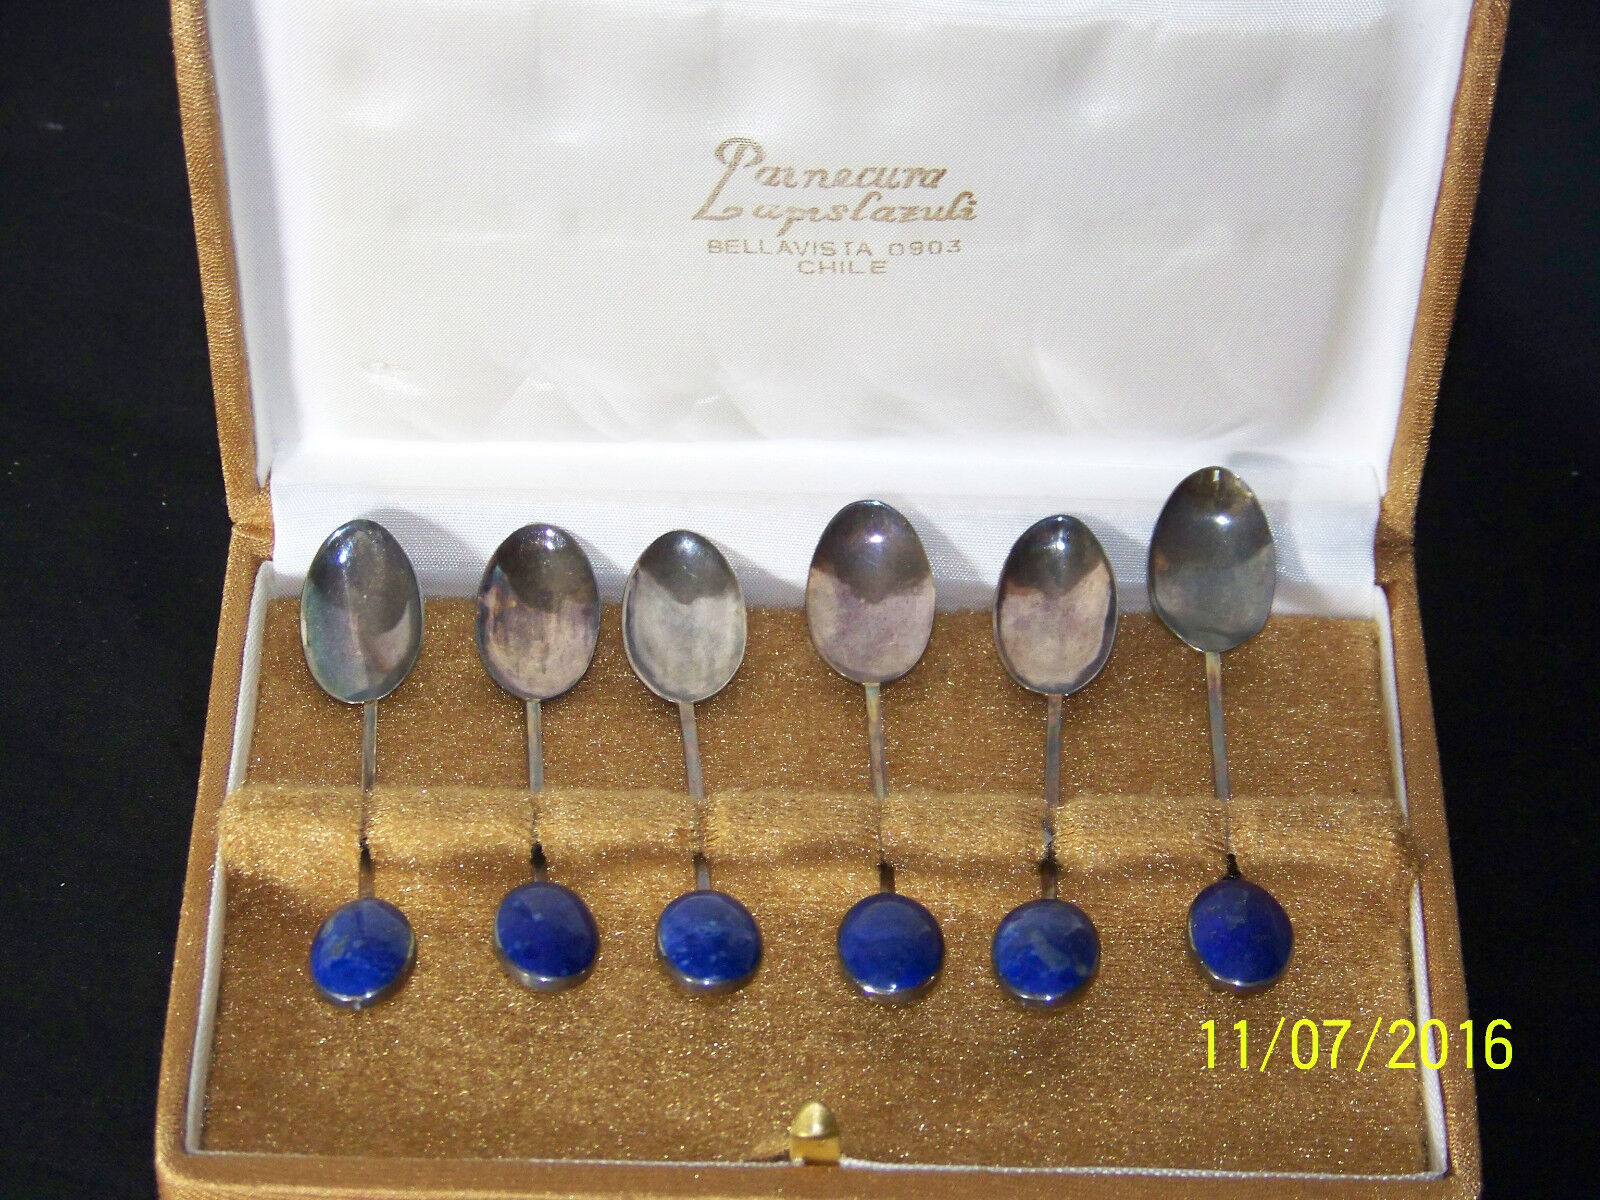 Vintage Sterling Silver Demitasse Spoon Set of 6 Cabachon Lapis Lazuli Stones